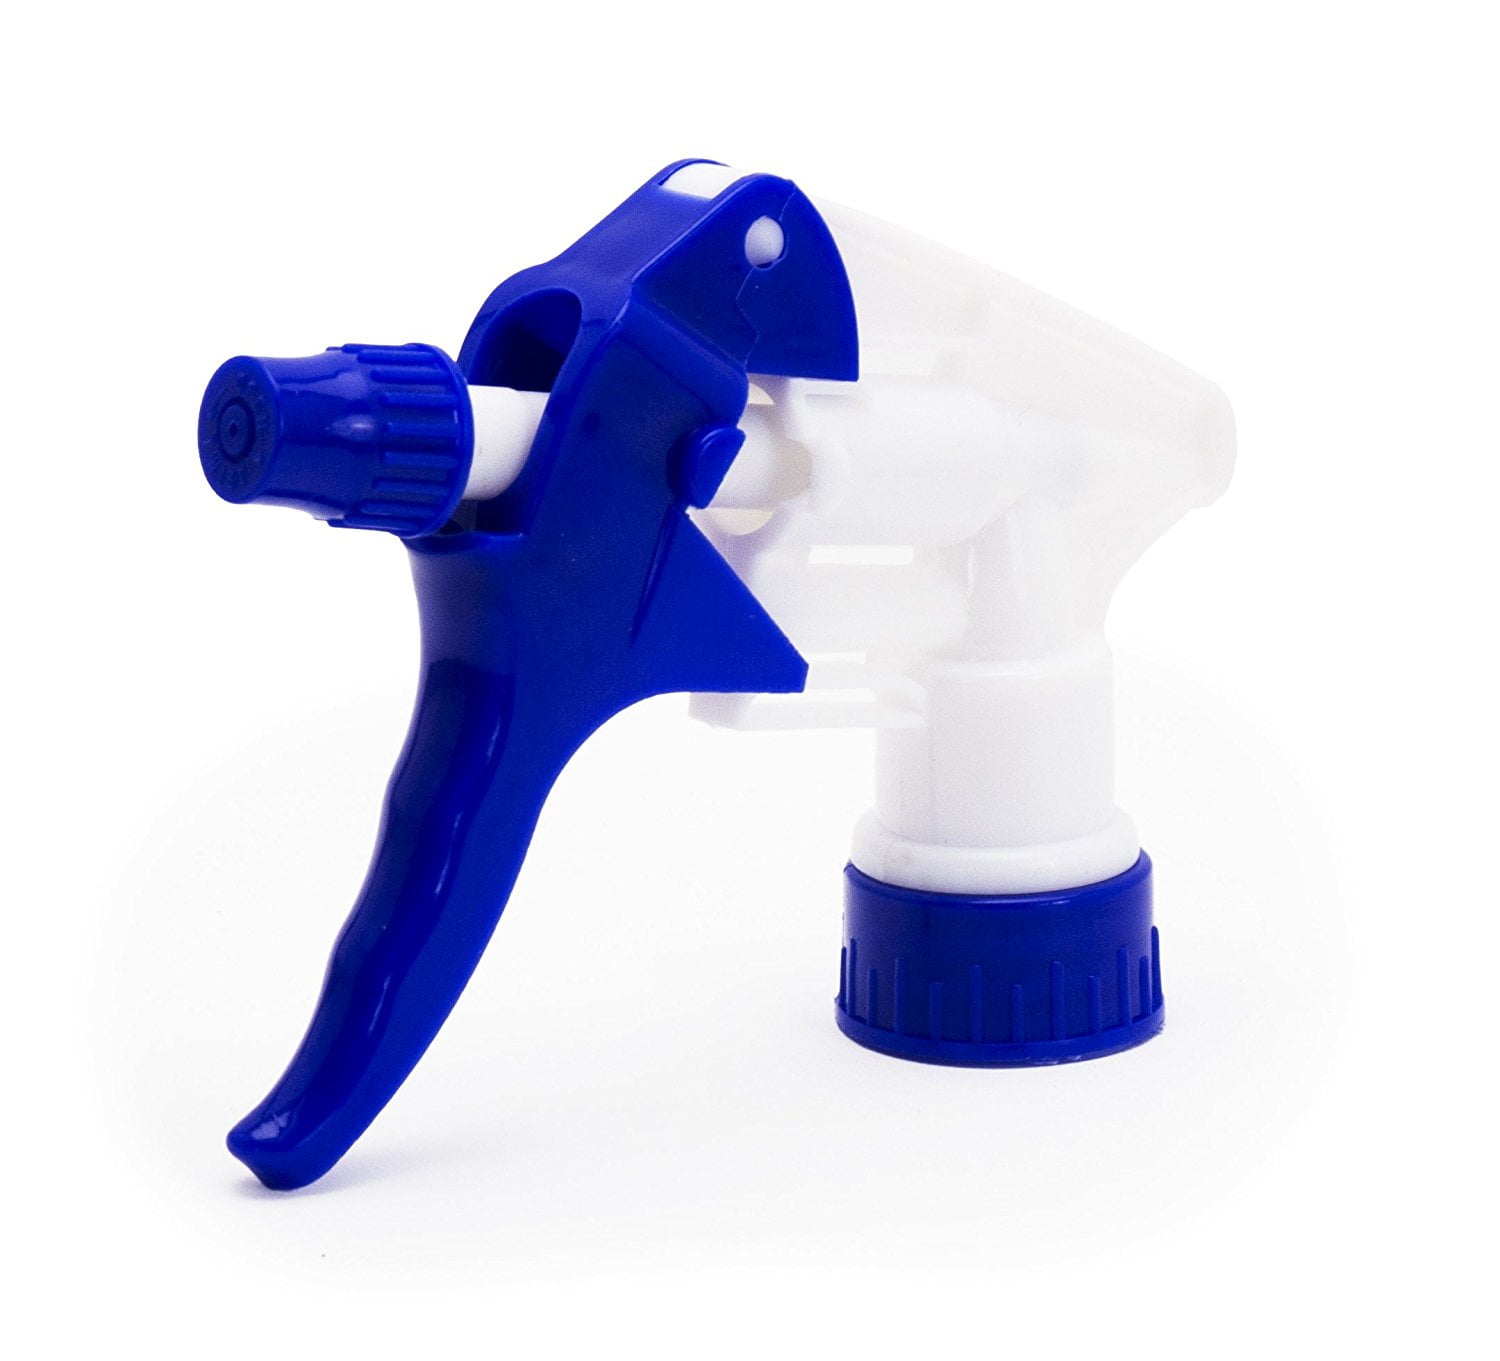 5x Replacement Trigger Sprayer Spray Bottle Nozzle Head Leak Proof Plastic